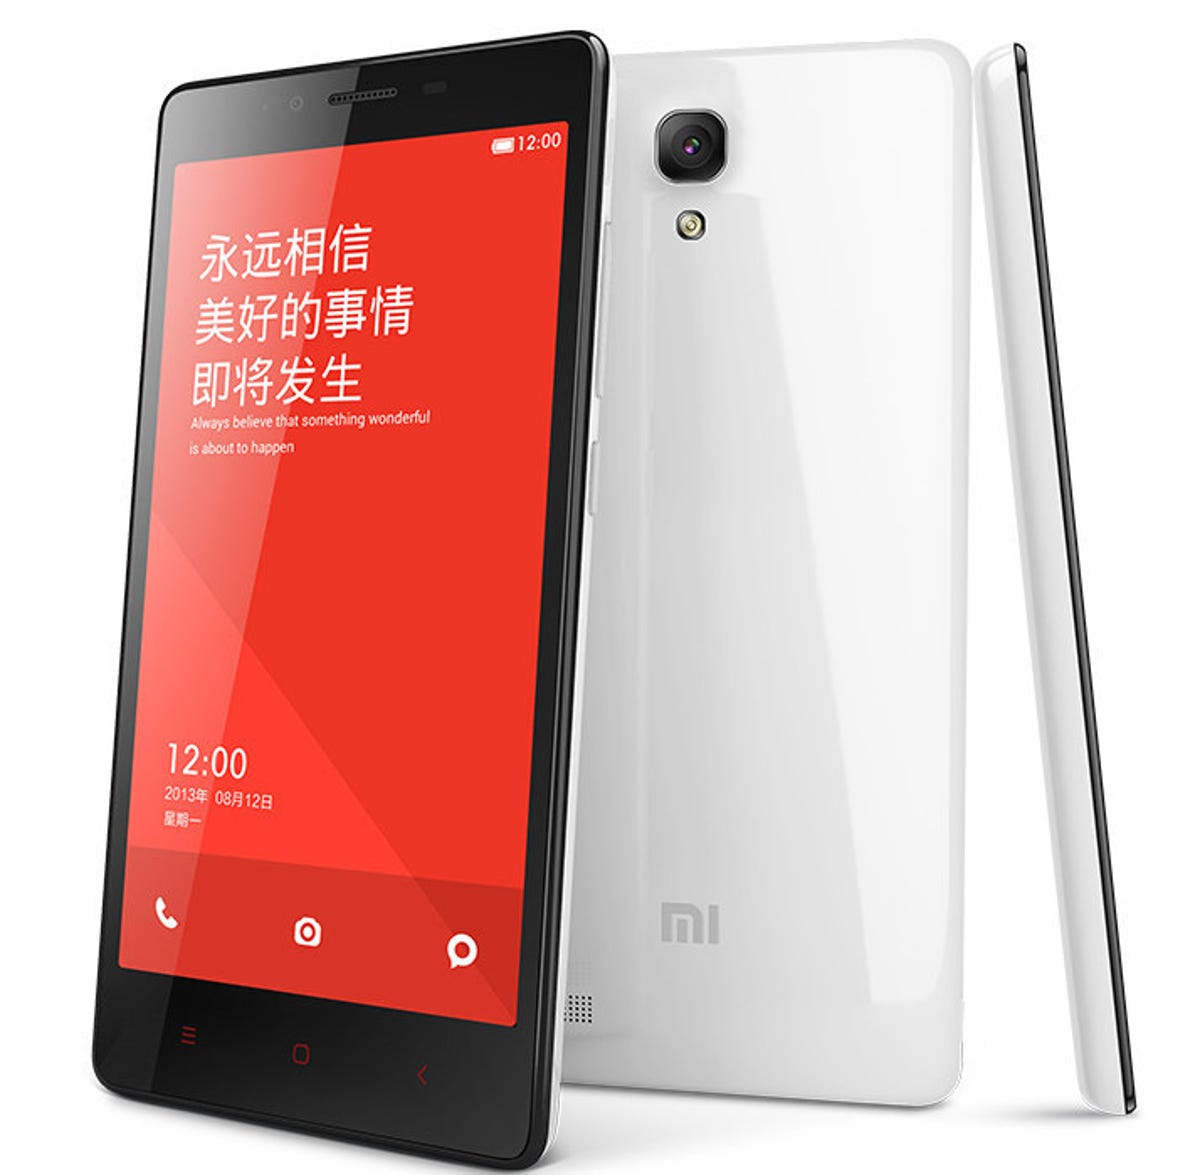 Xiaomi Redmi Note review: Xiaomi unveils Redmi Note phablet for $130 - CNET